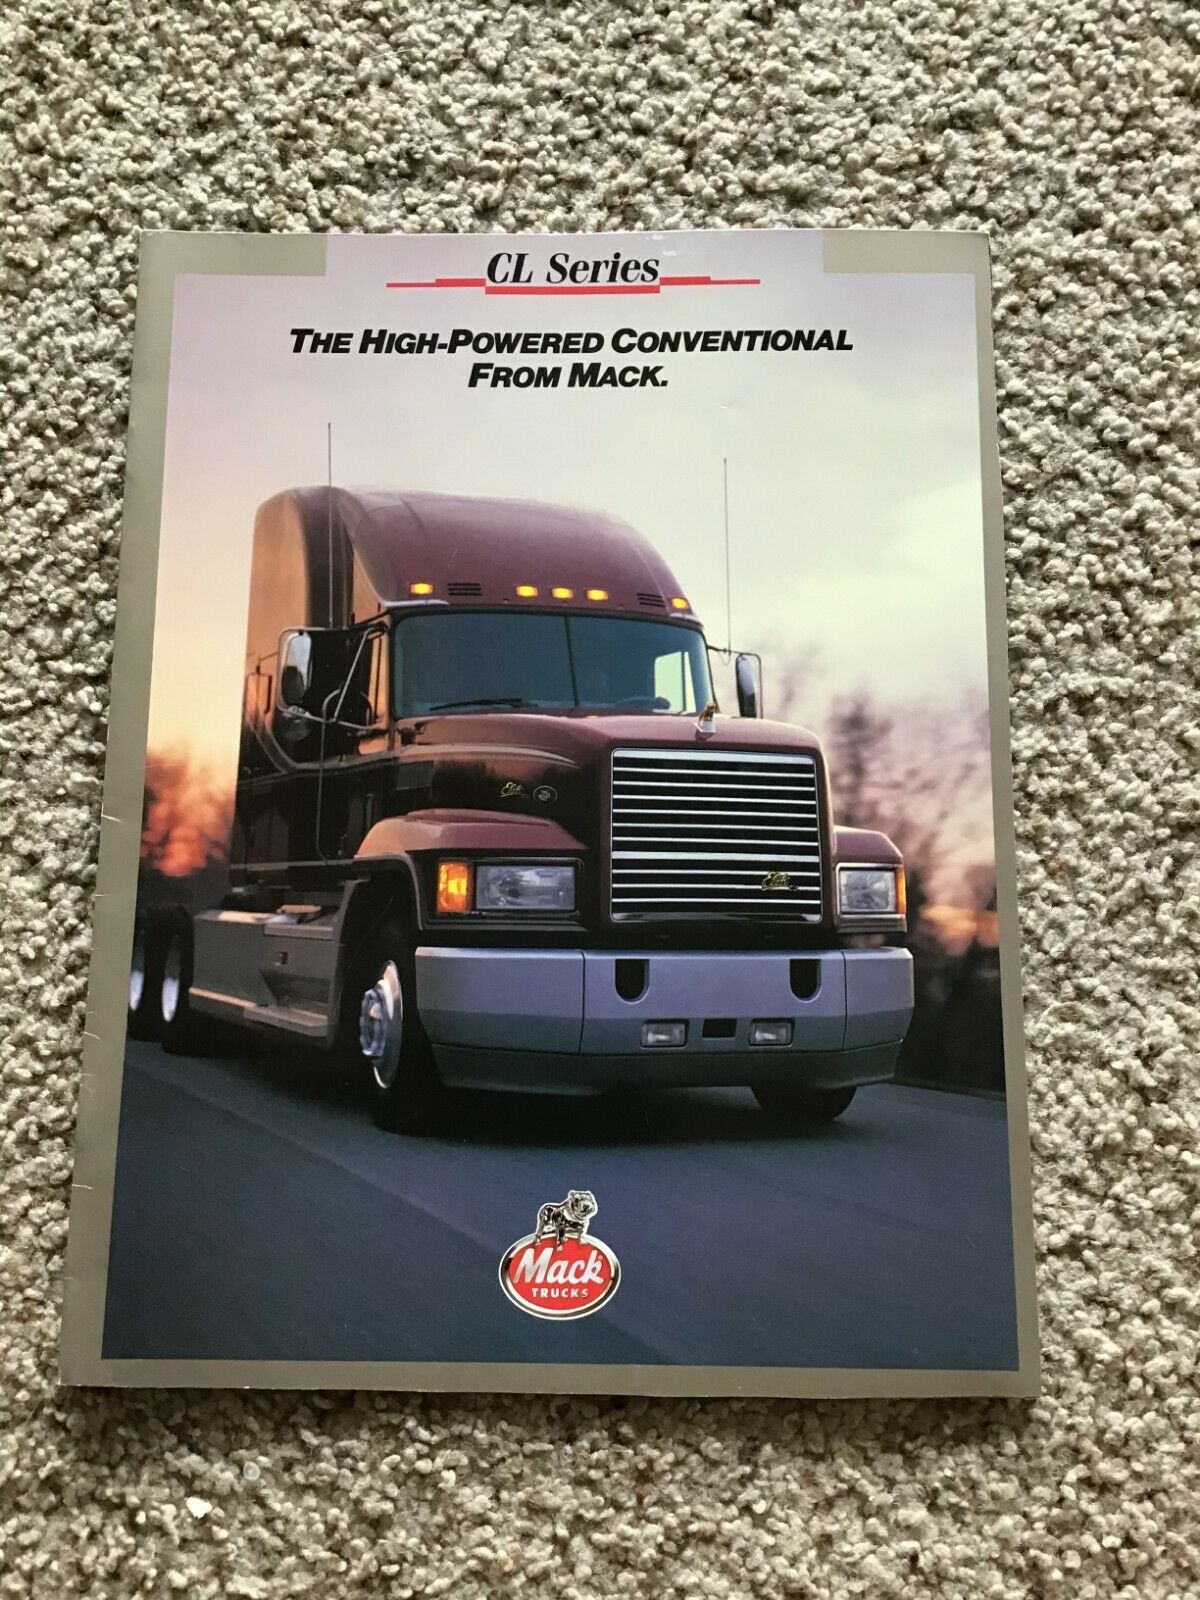 1992 Mack Trucks Conventional Cl Series Sales Catalogue.